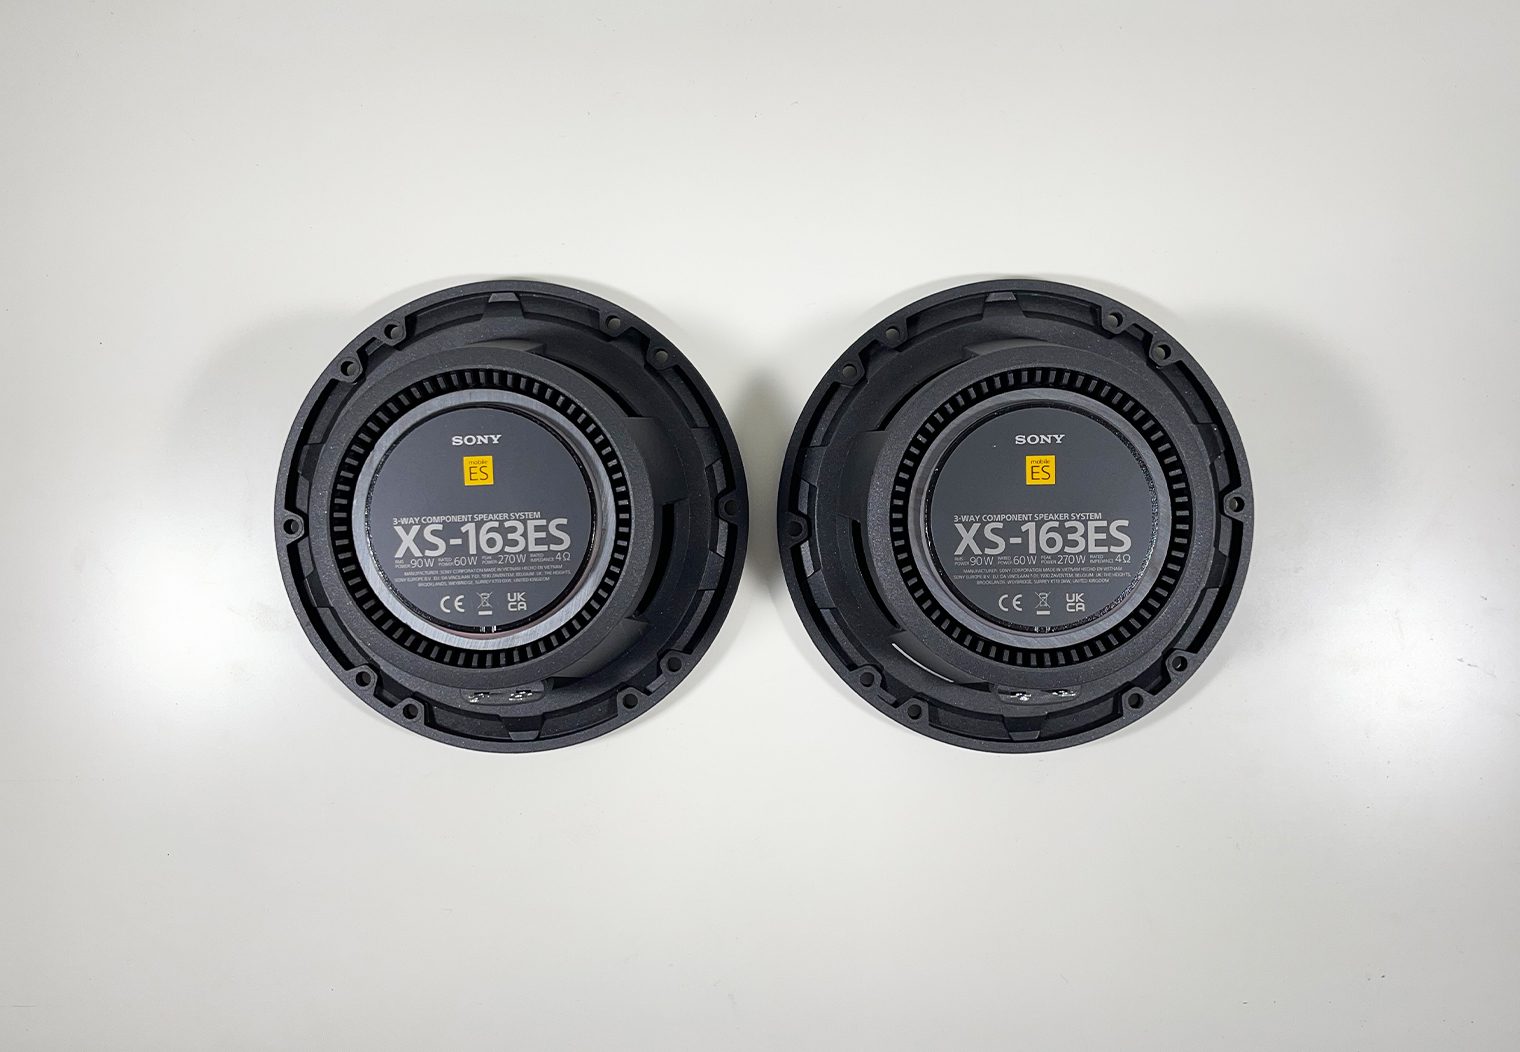 Sony XS-163ES 6 1/2 inch speakers rear